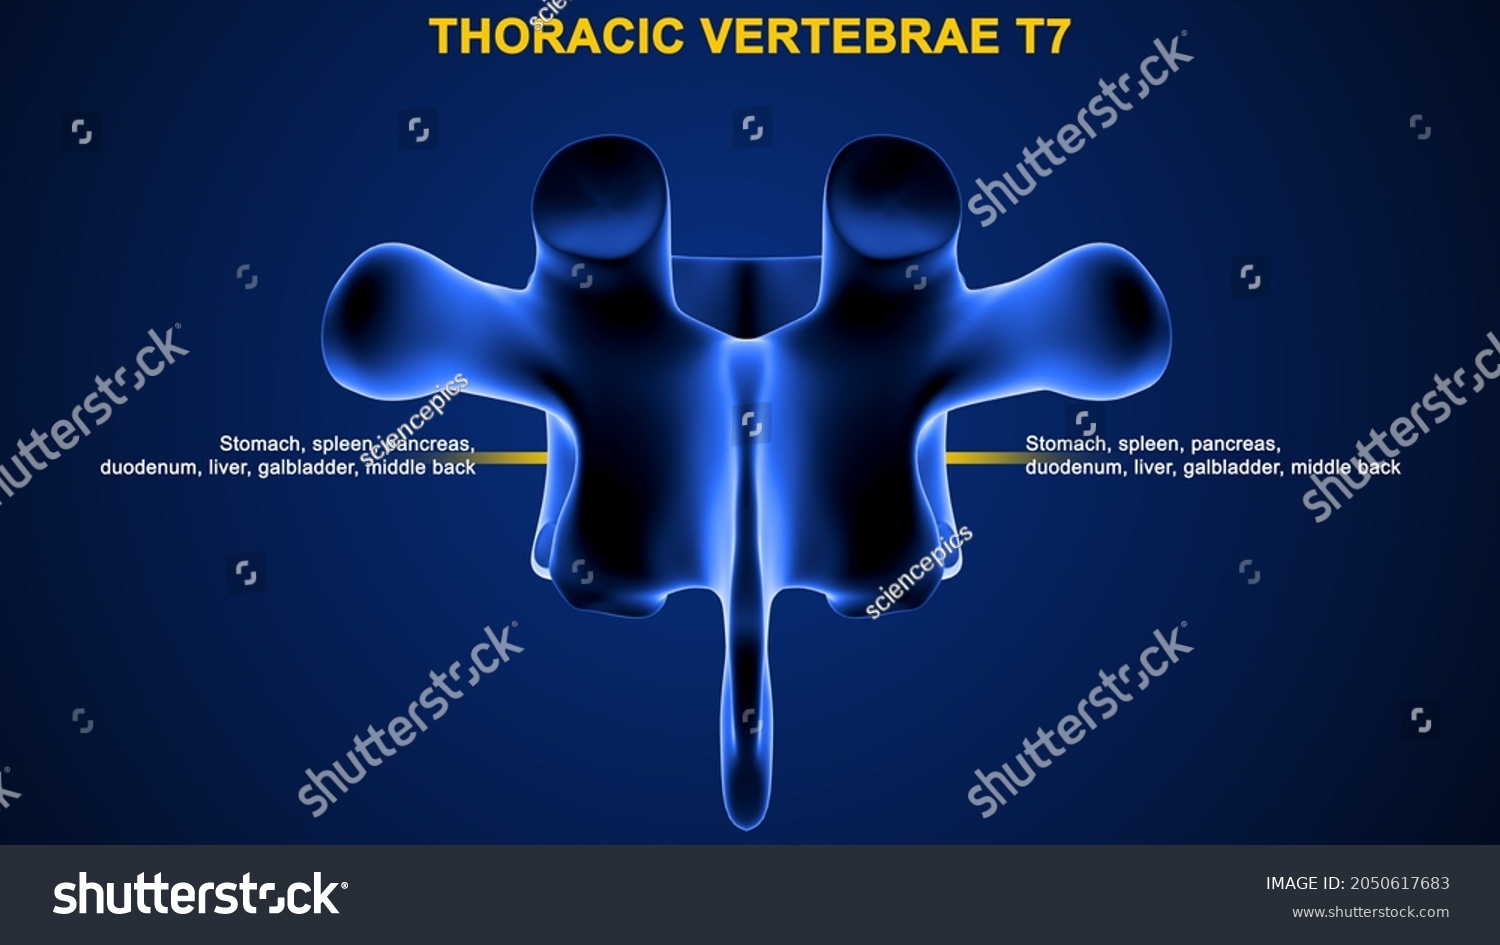 Thoracic Vertebrae T7 Bone Anatomy Labeled стоковая иллюстрация 2050617683 Shutterstock 1961